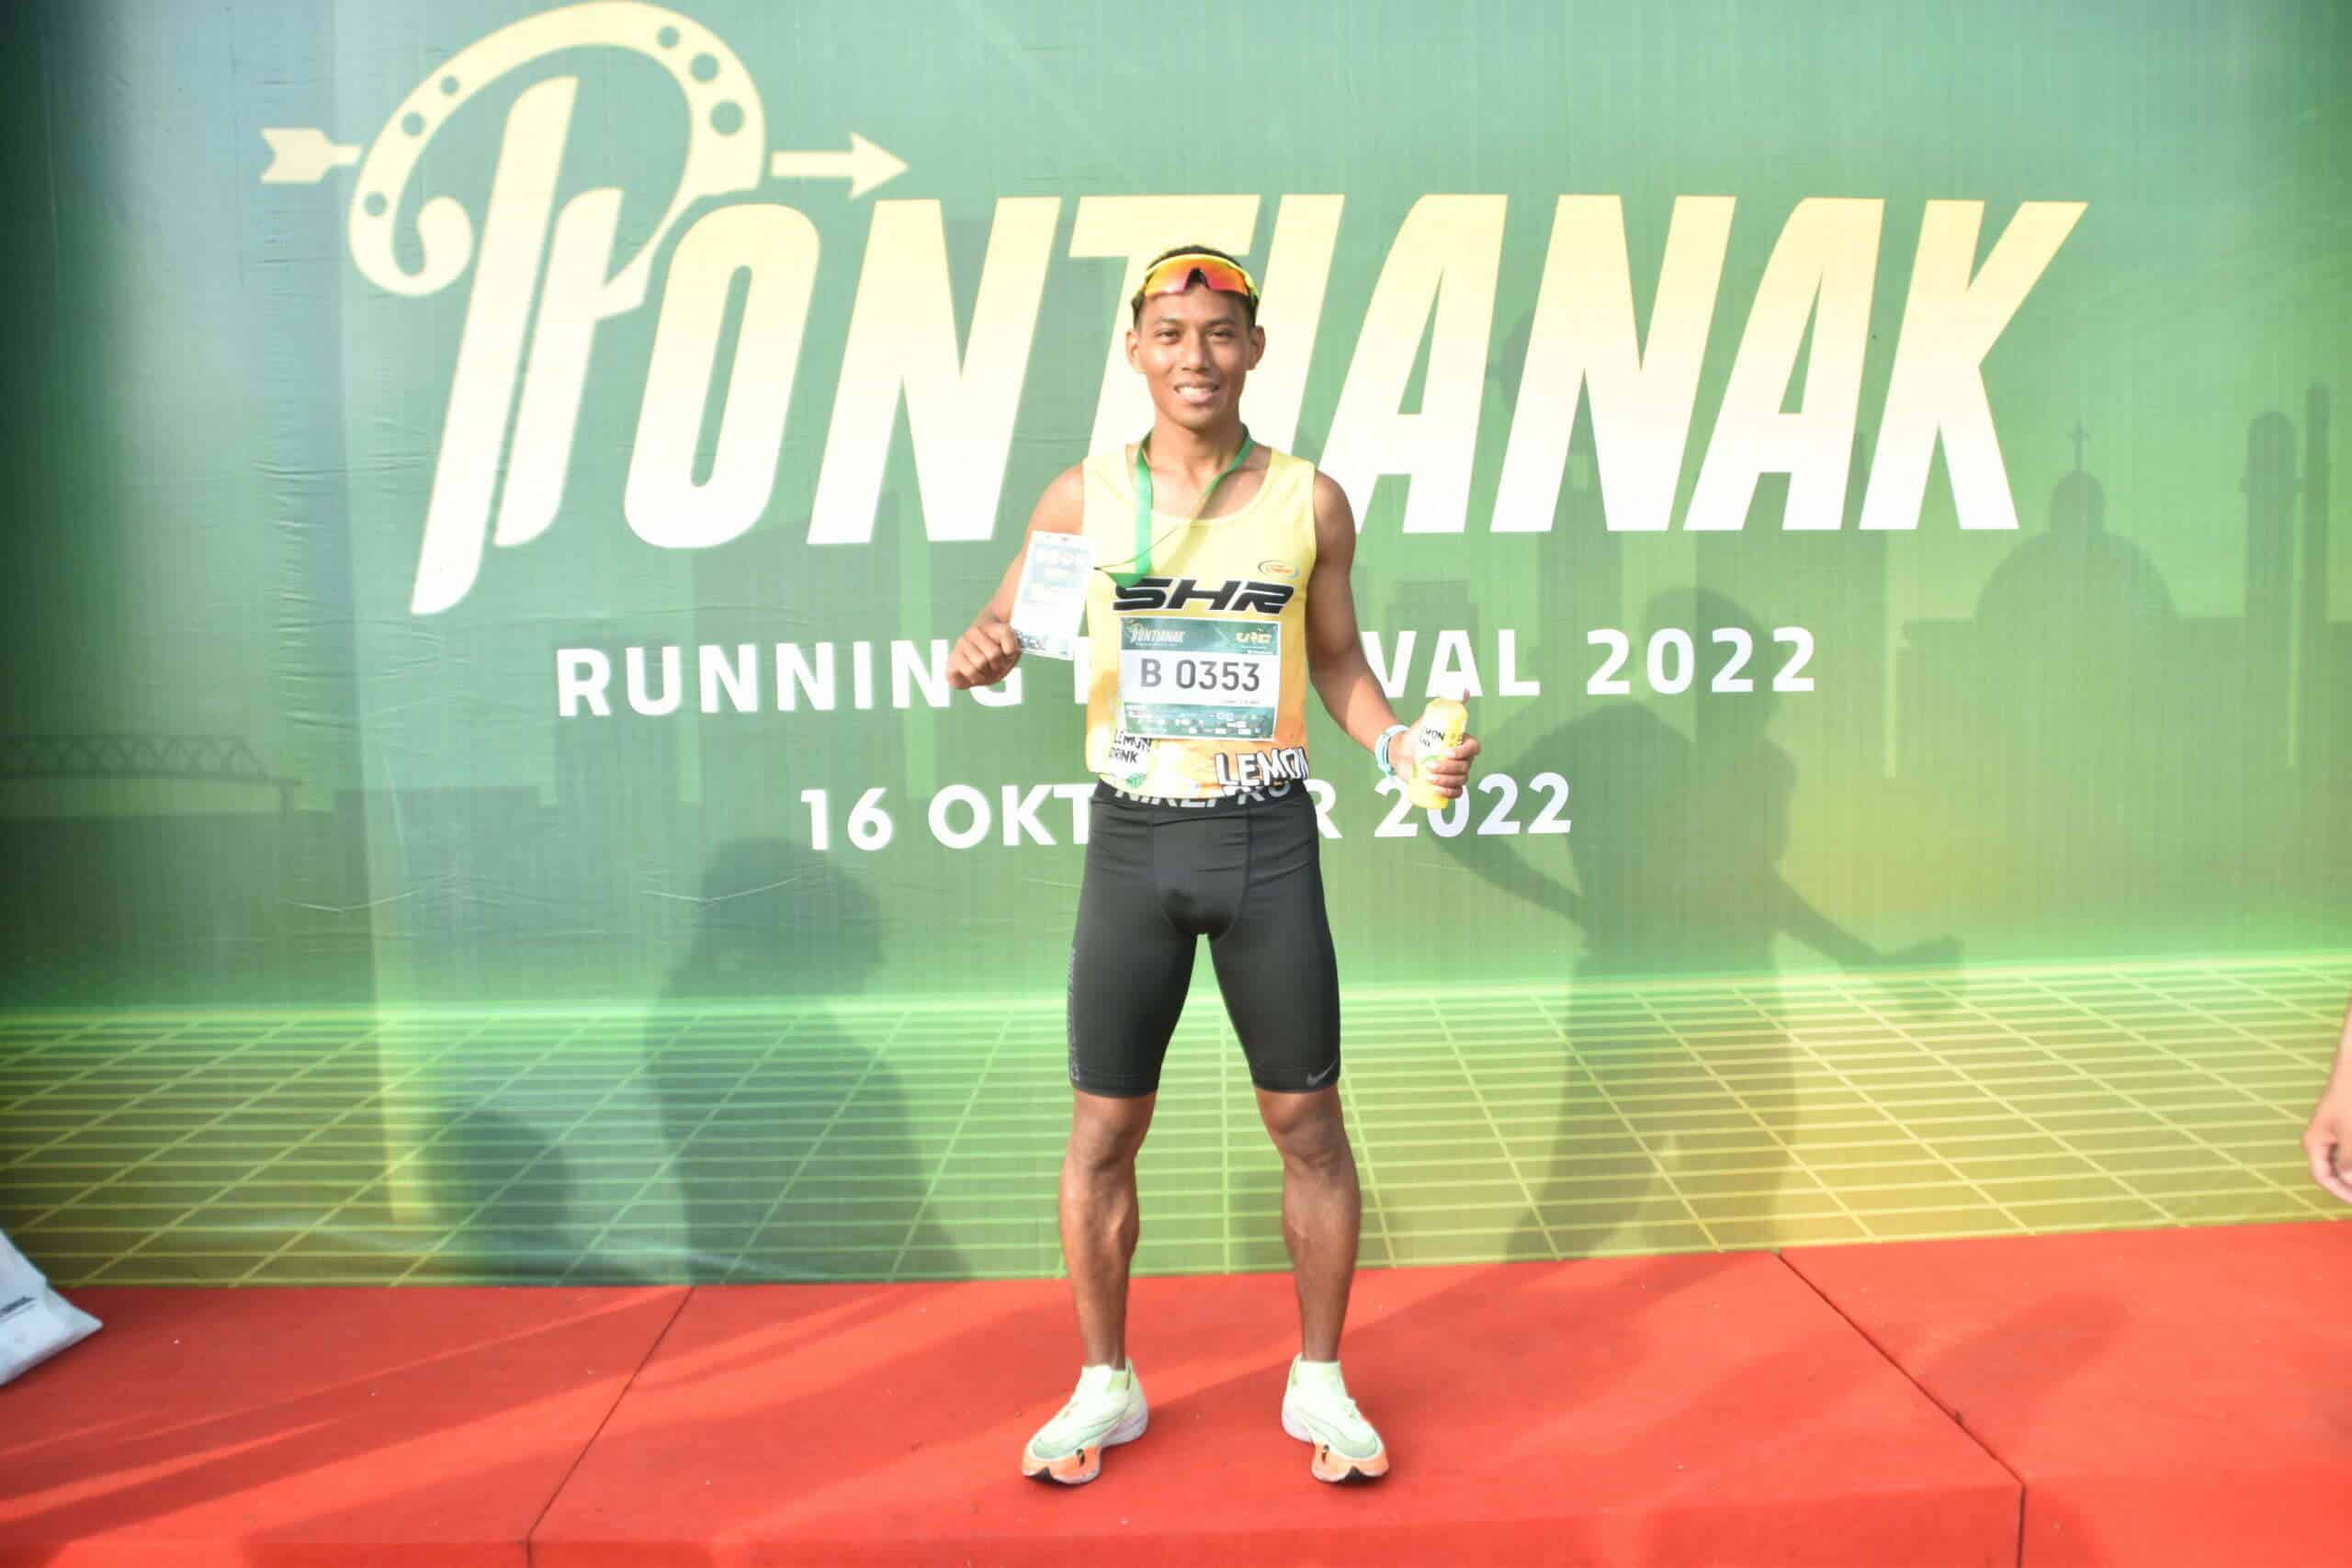 Juara Pontianak Running Festival 2022, Irmansyah. (Foto: Biro Adpim For KalbarOnline.com)